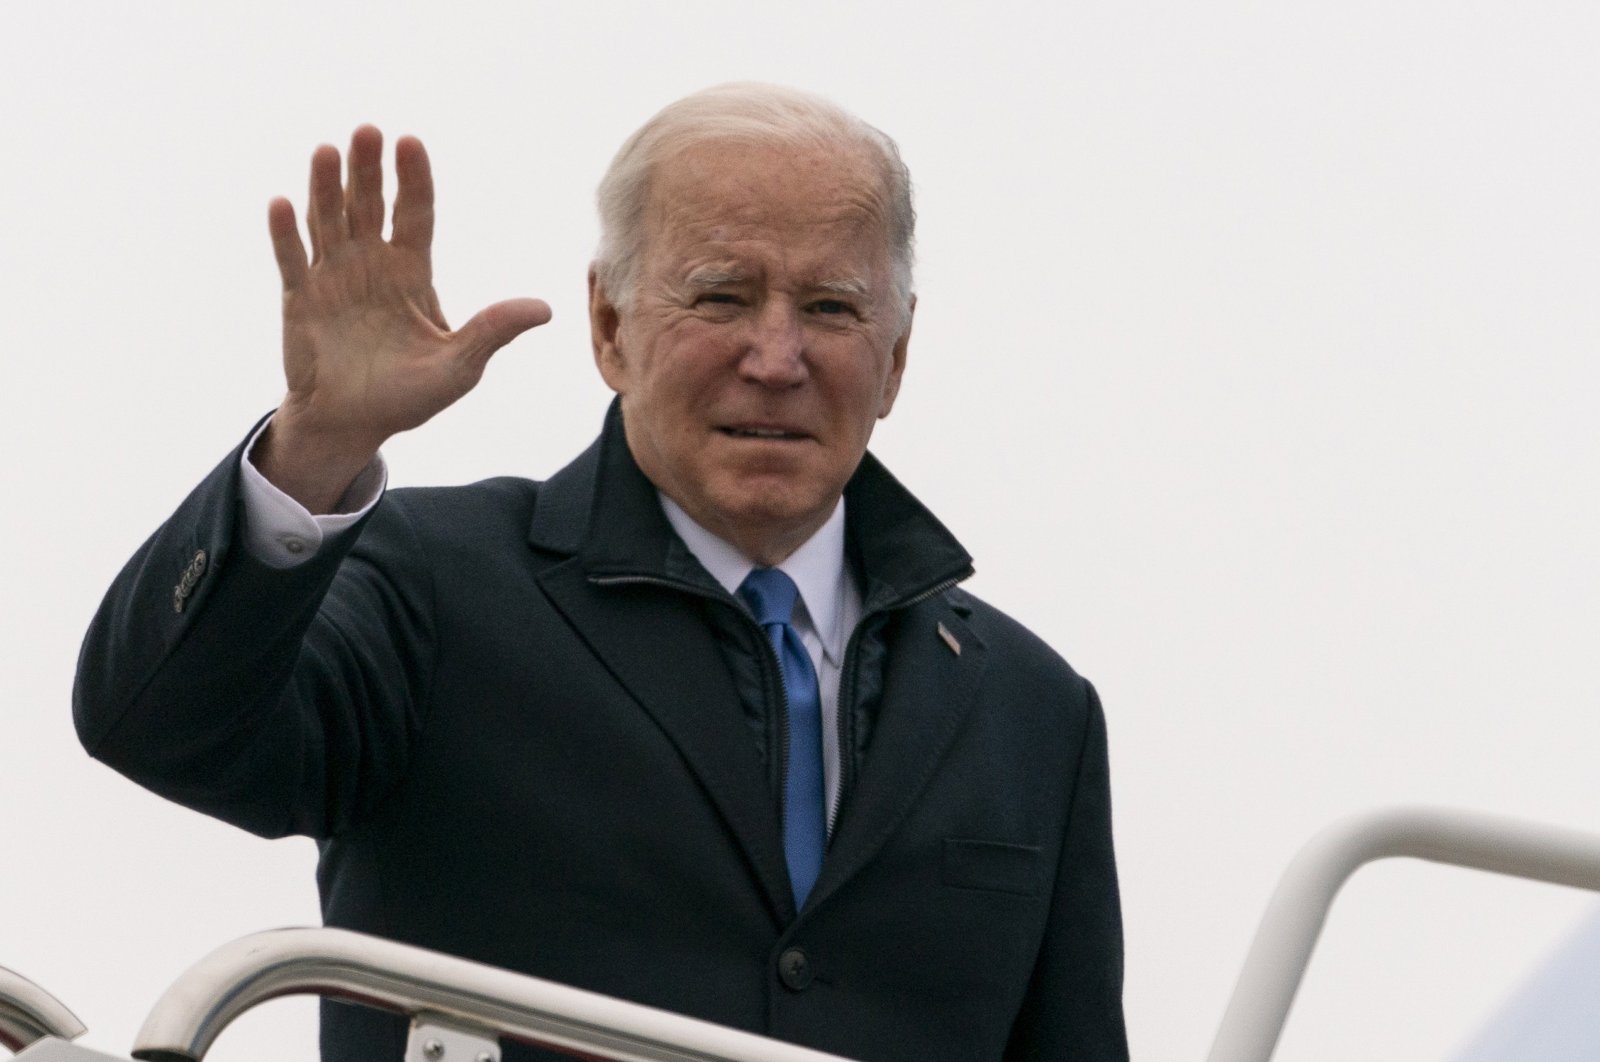 U.S. President Joe Biden waves as he boards Air Force One upon departure at Andrews Air Force Base, Maryland, U.S., Dec. 8, 2021. (EPA Photo)